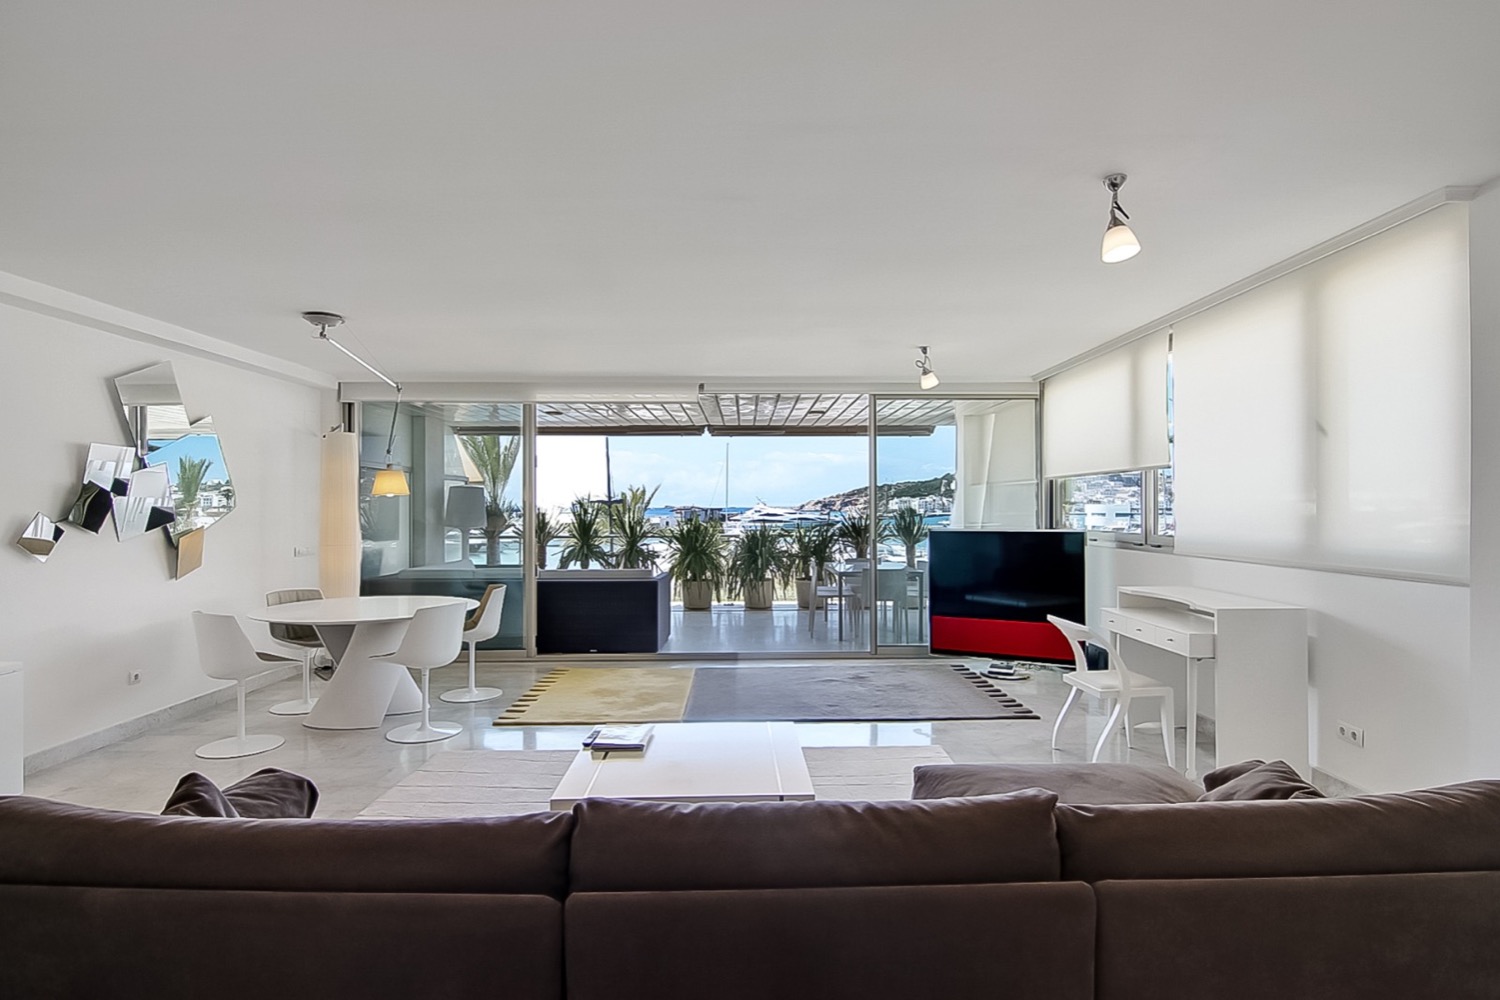 Luxury property with unbeatable views of the Marina Botafoc and Dalt Vila